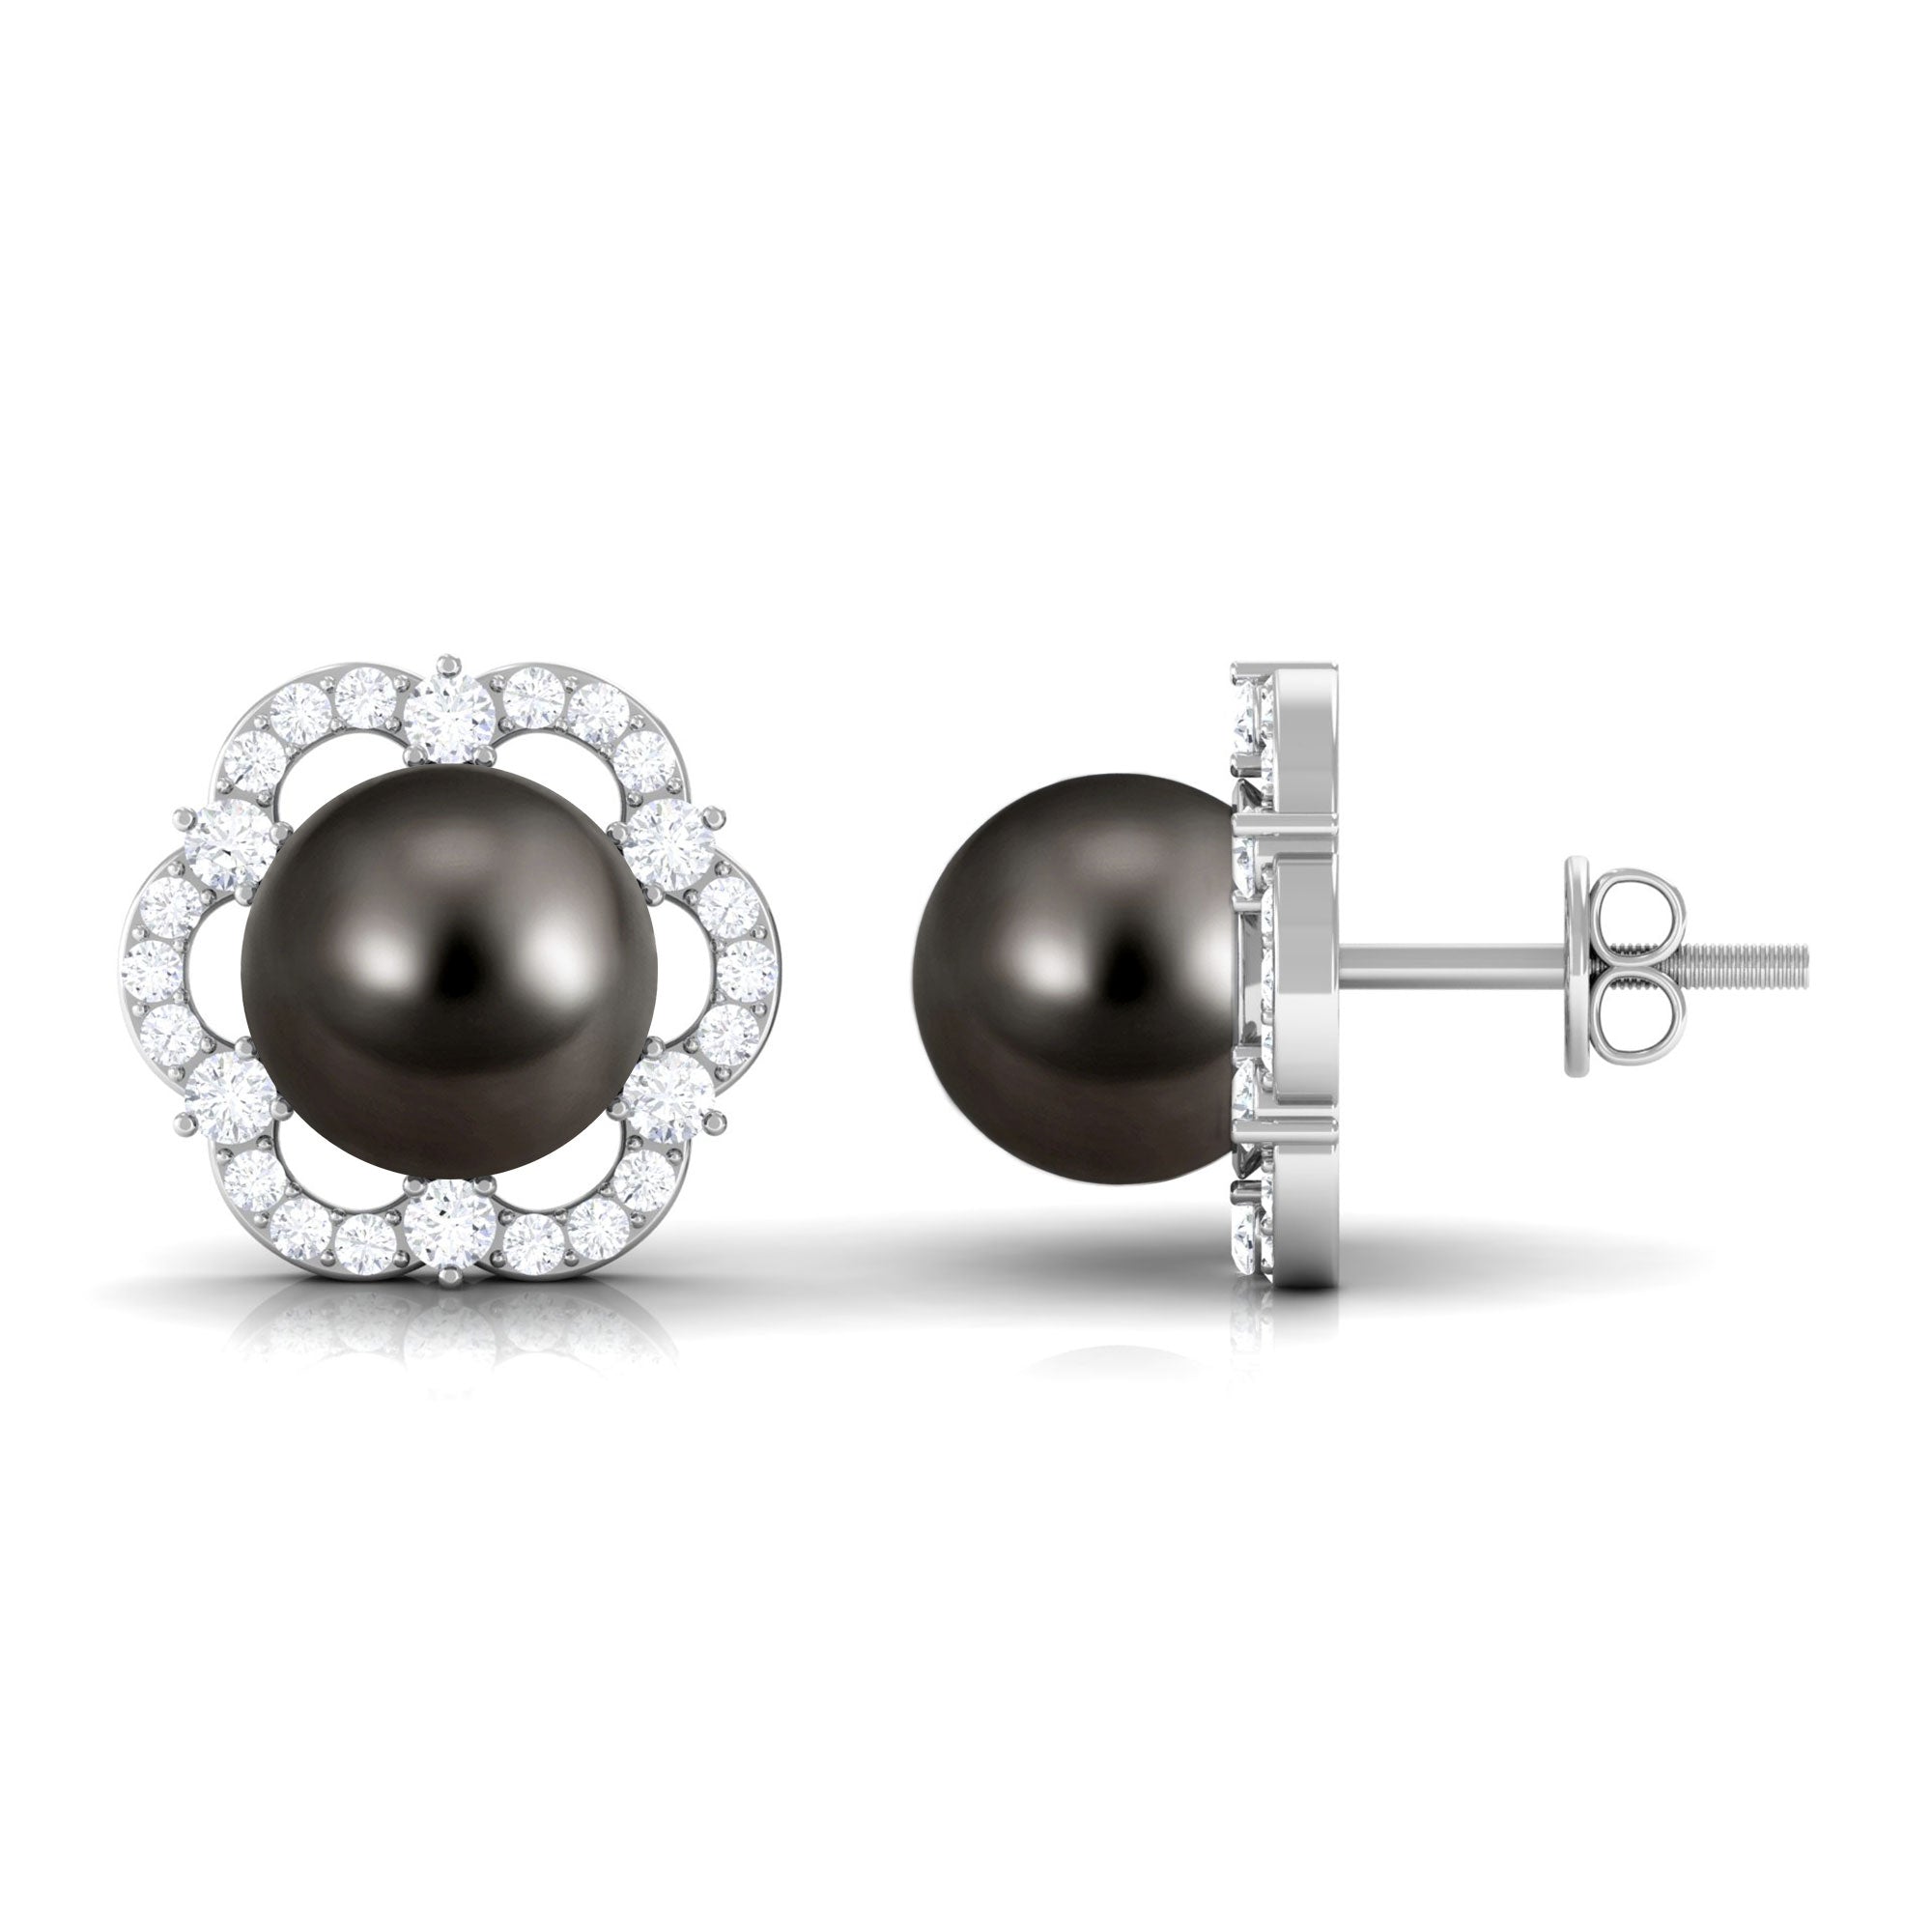 Floral Tahitian Pearl Stud Earrings with Diamond Tahitian pearl - ( AAA ) - Quality - Rosec Jewels